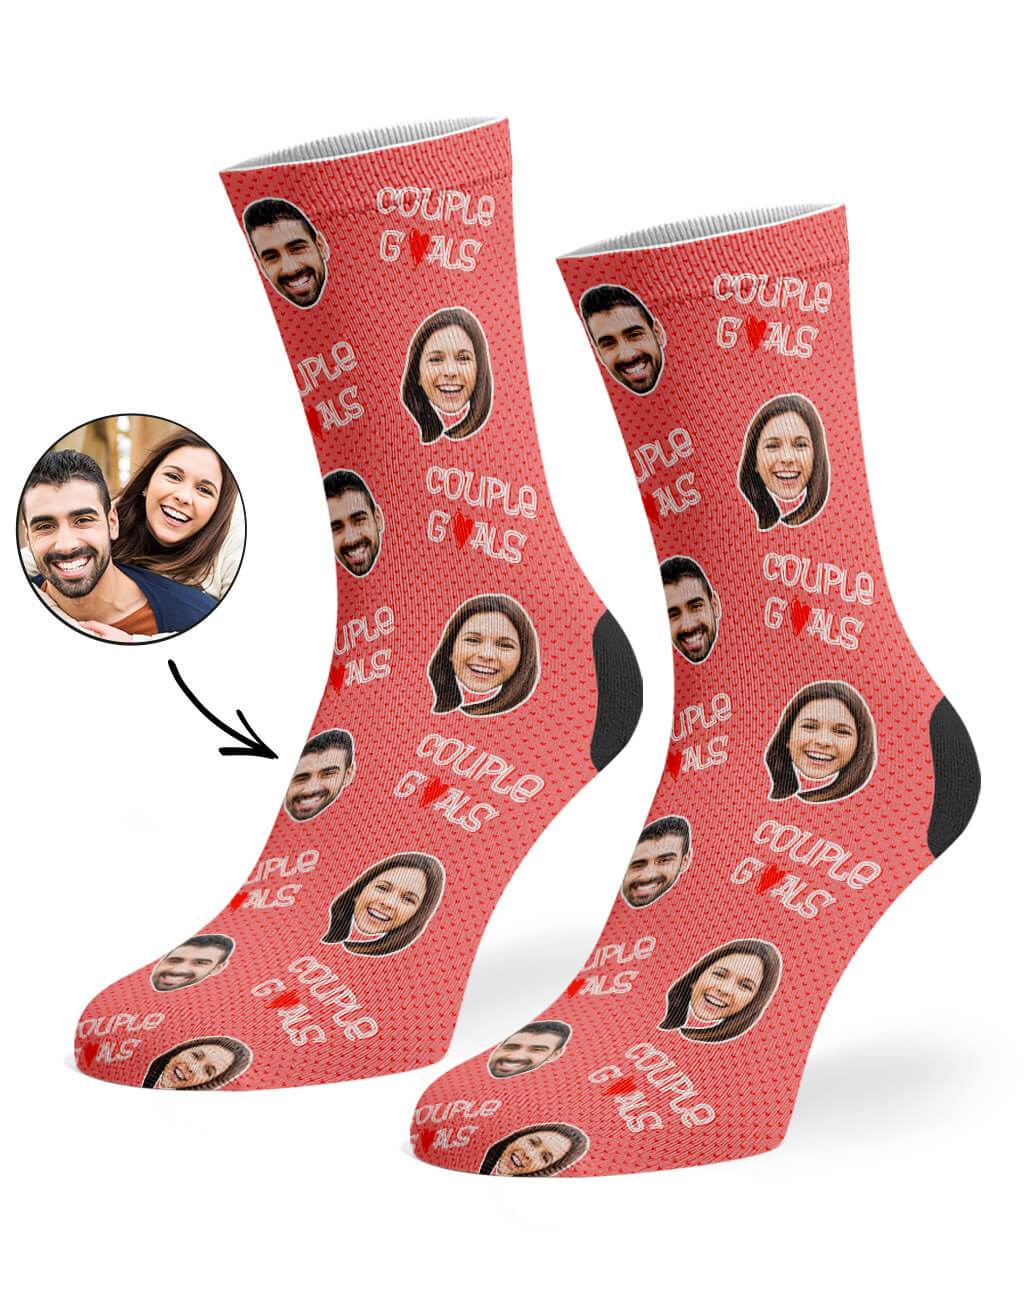 Couple Goals Custom Socks